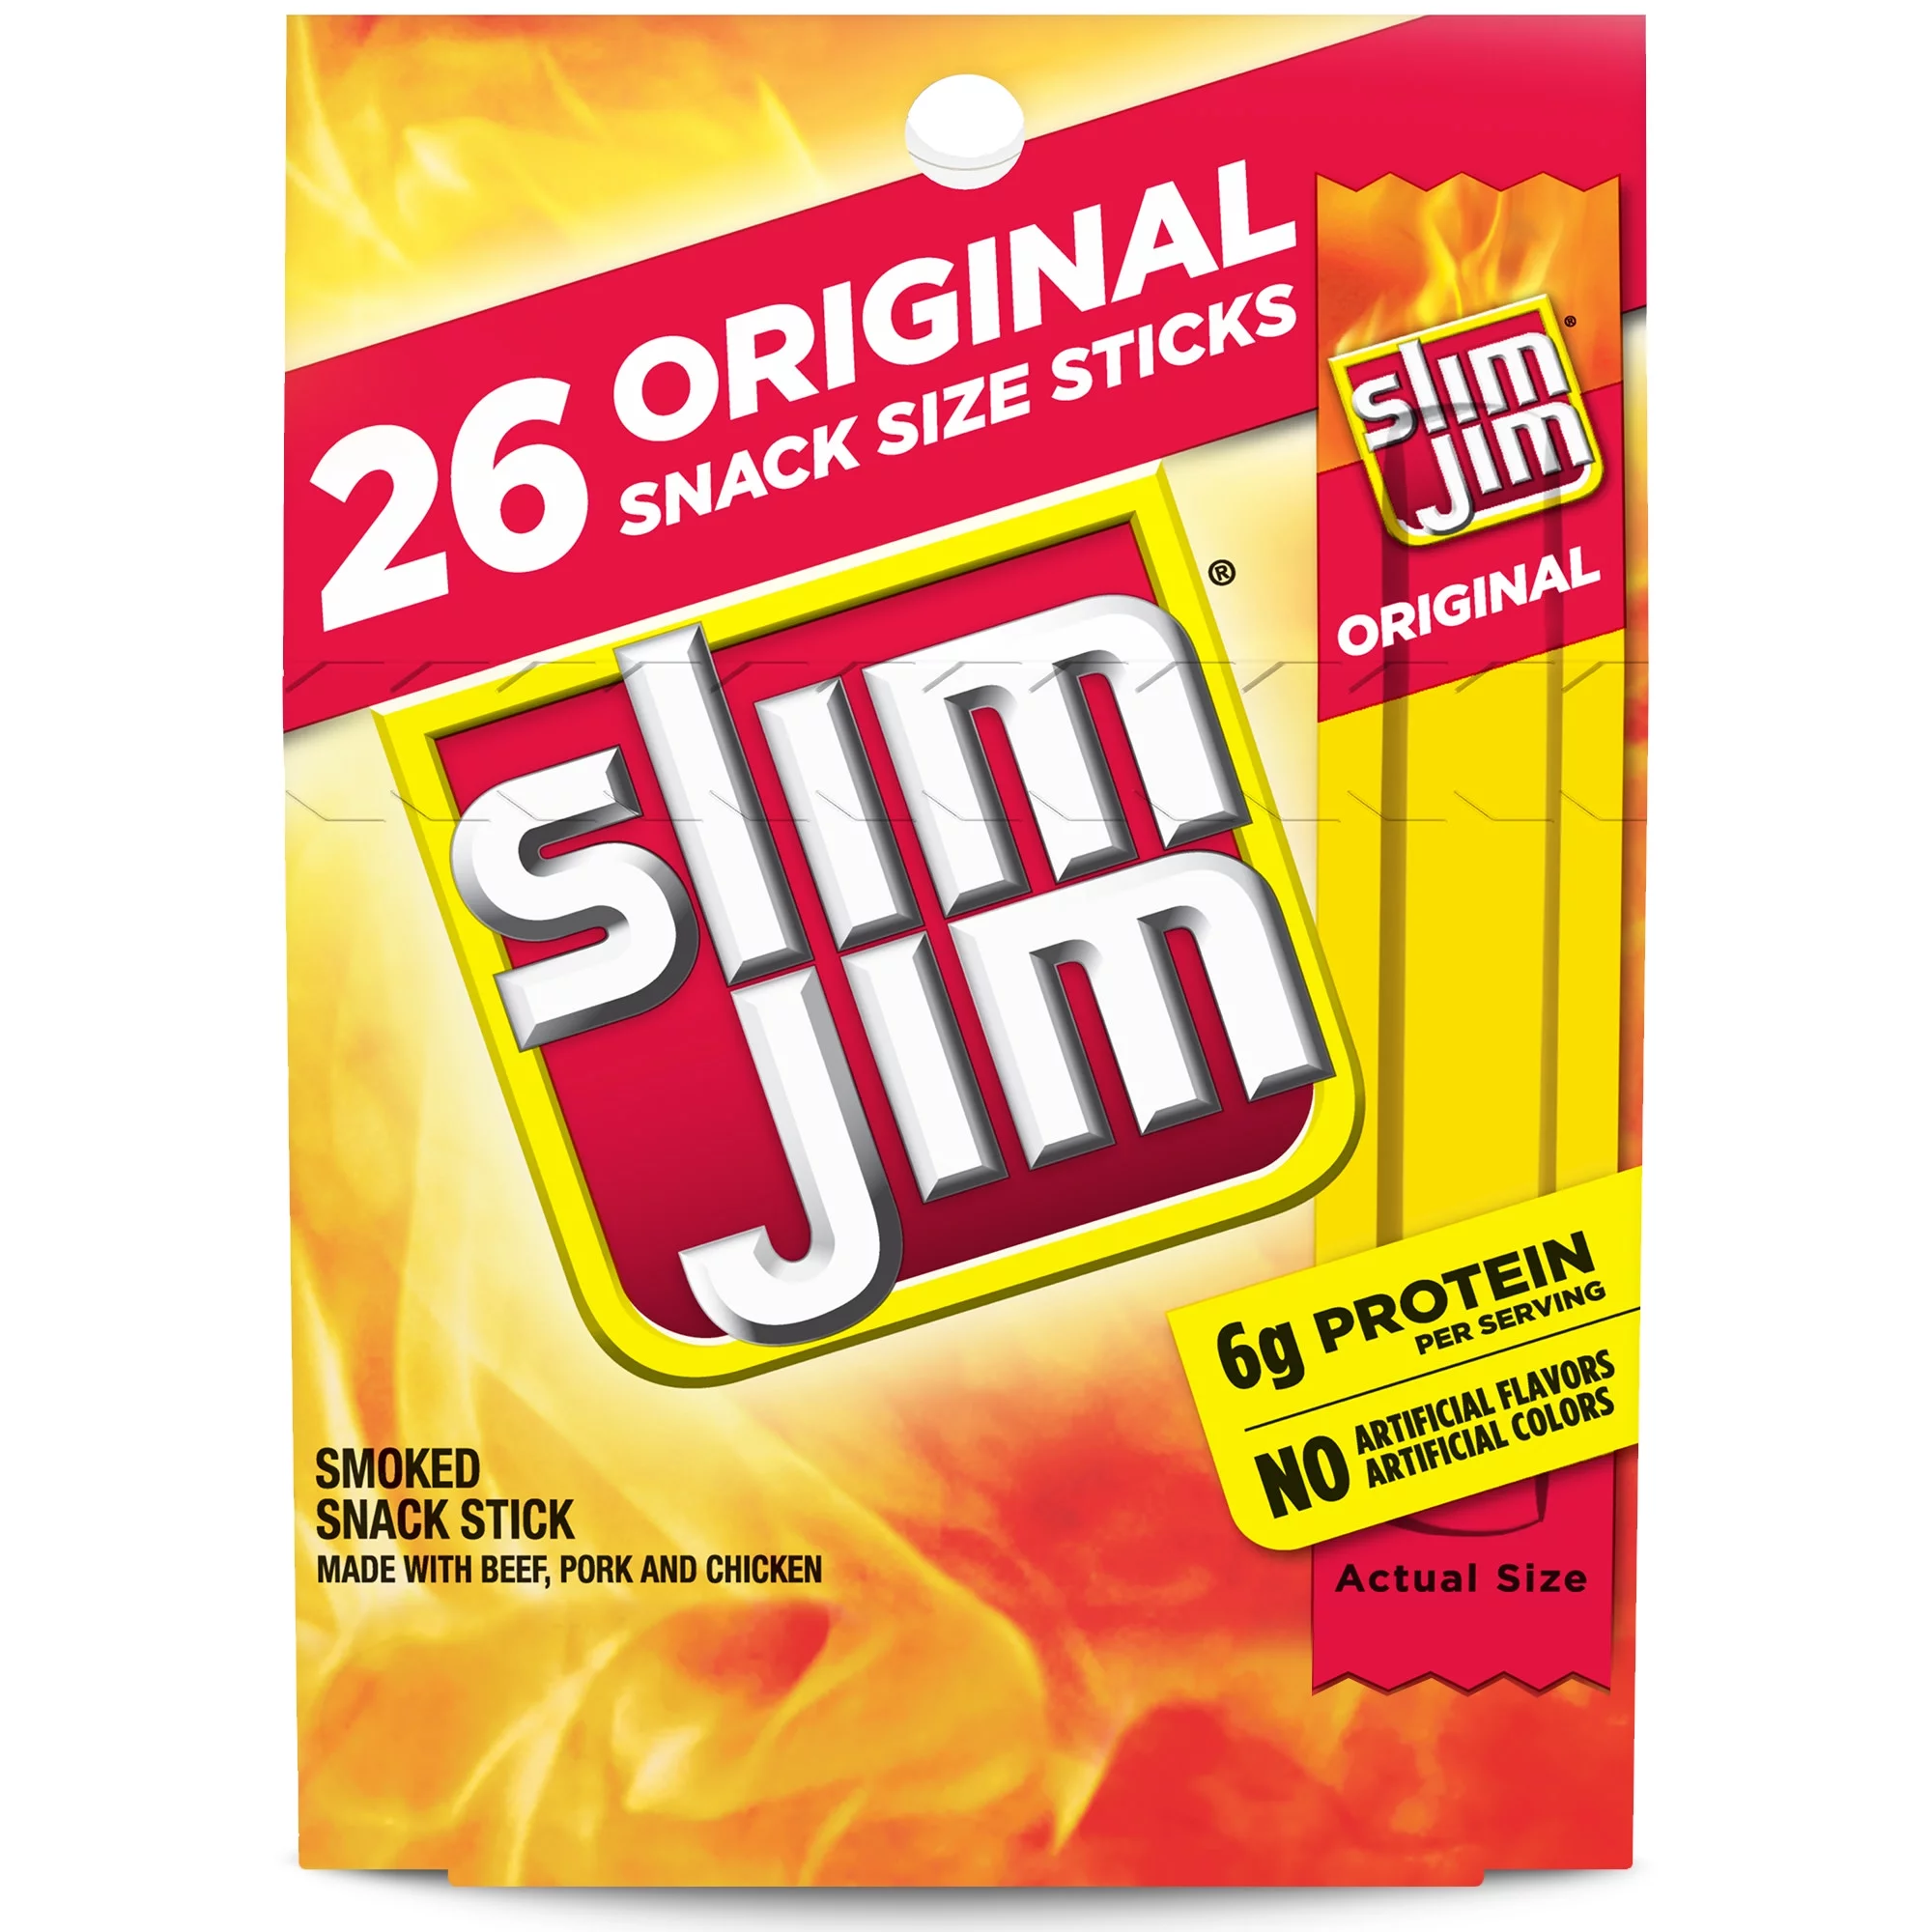 Slim Jim Original Snack Size Stick, 0.28 oz Meat Snacks, 26 Count Box